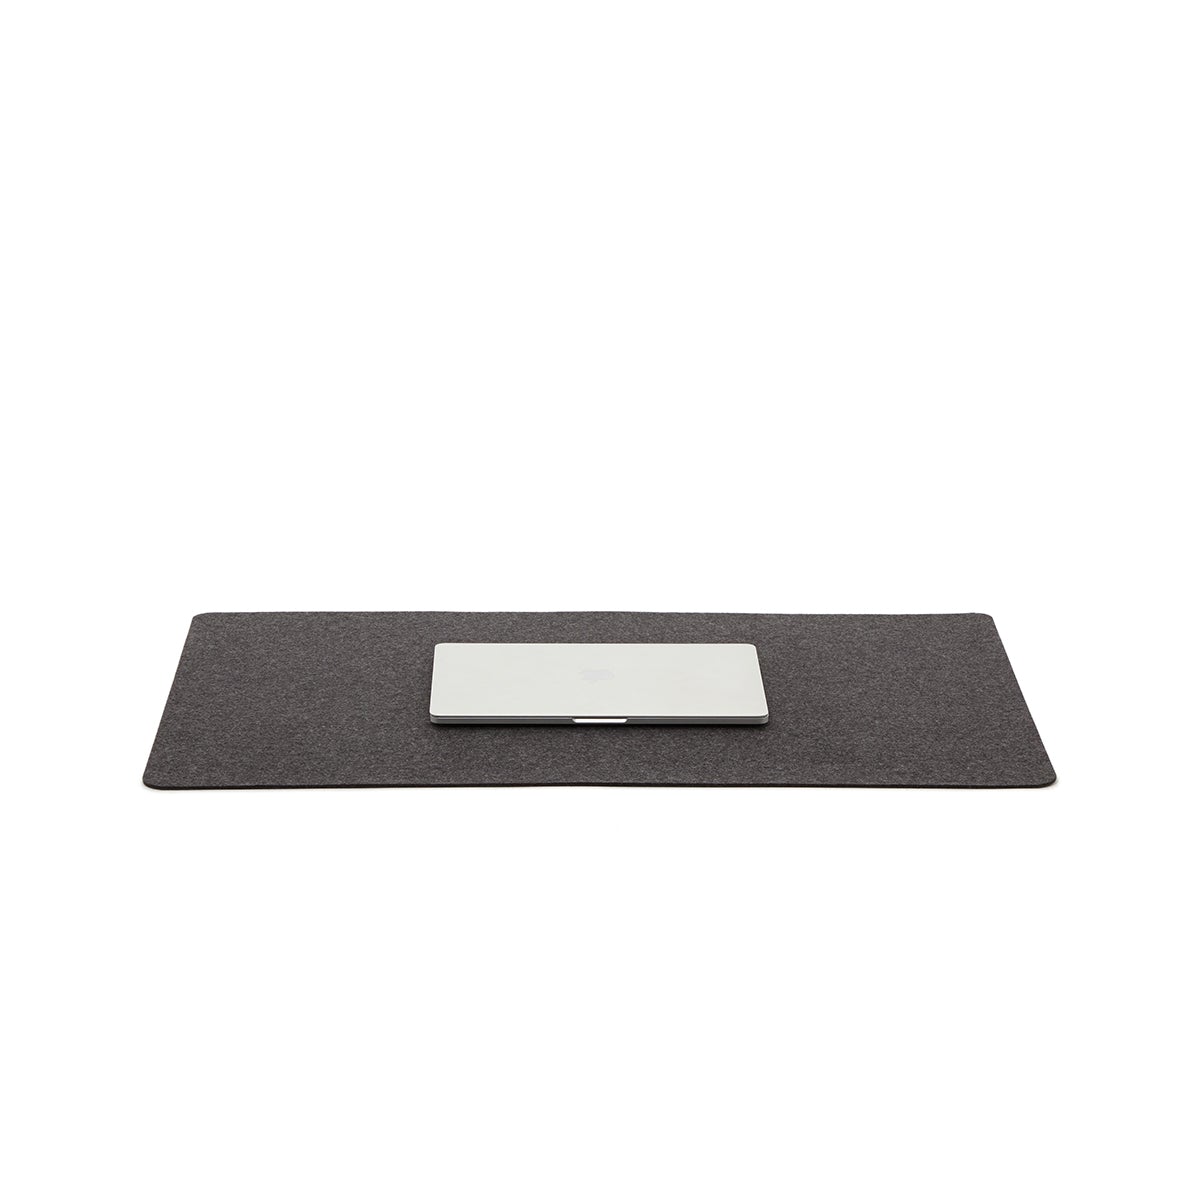 MOSEN Desk Pad - Charcoal